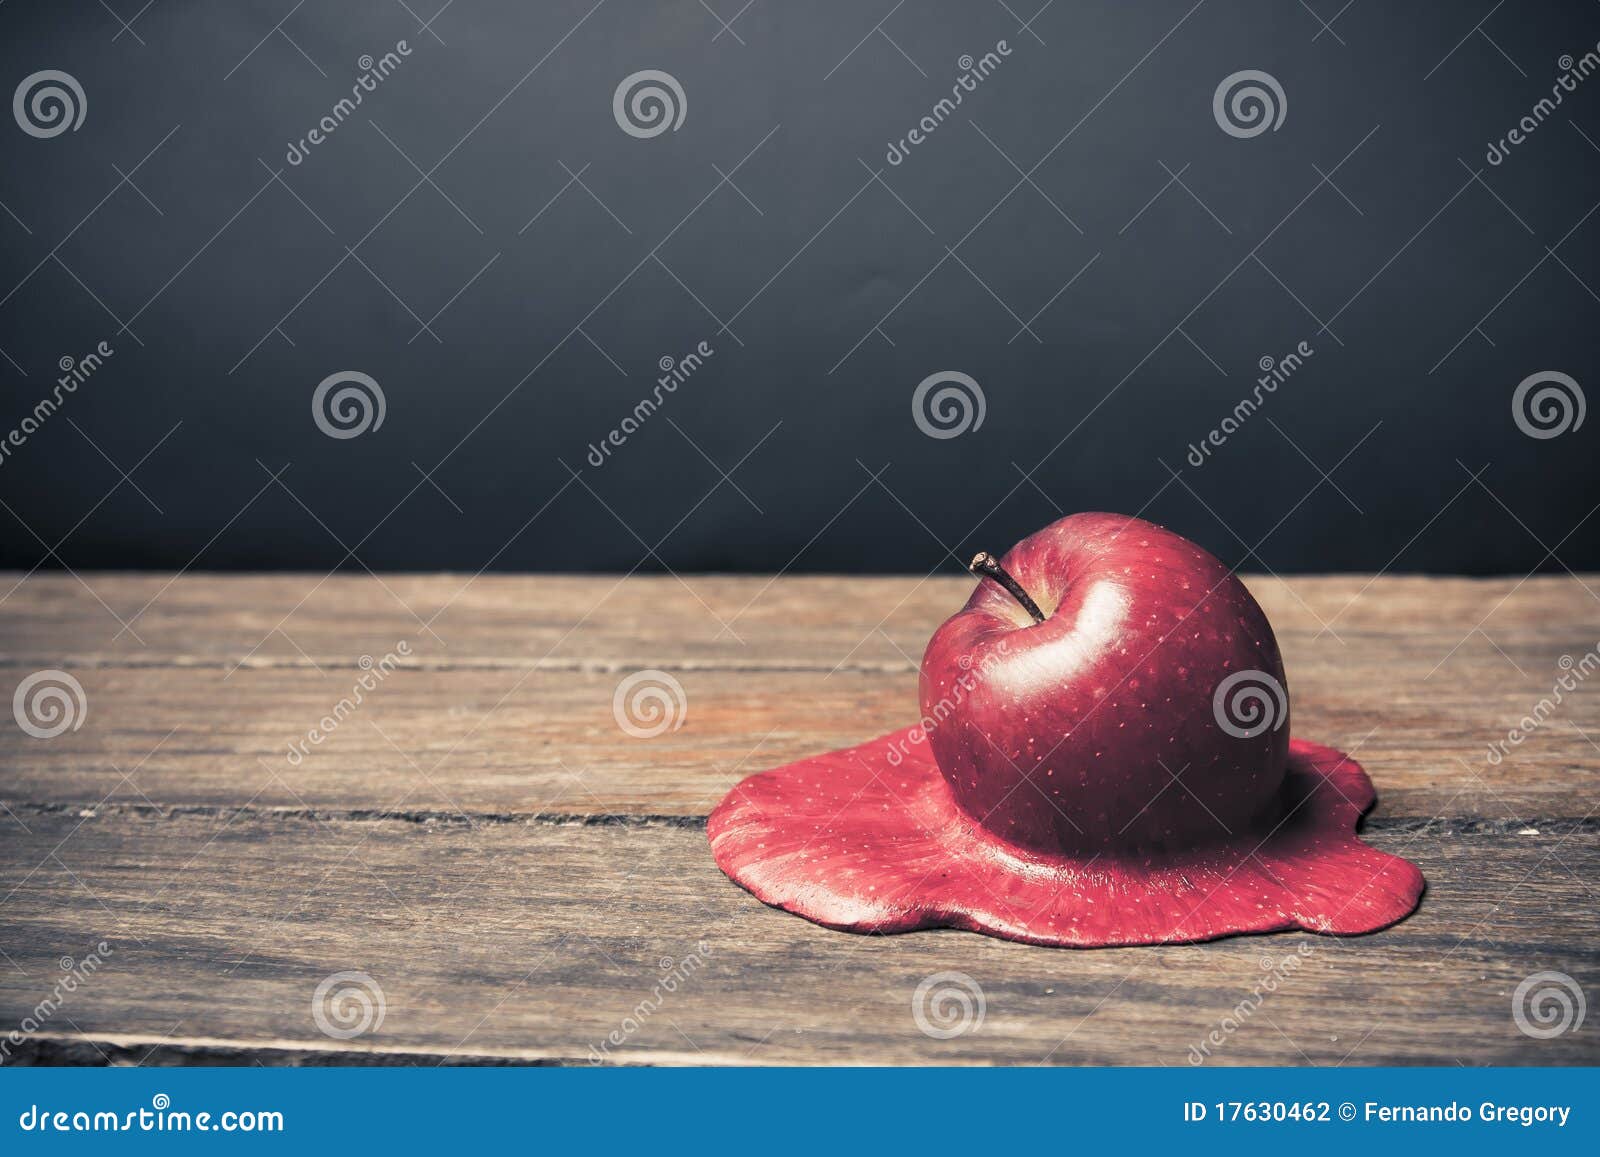 apple melting on the floor